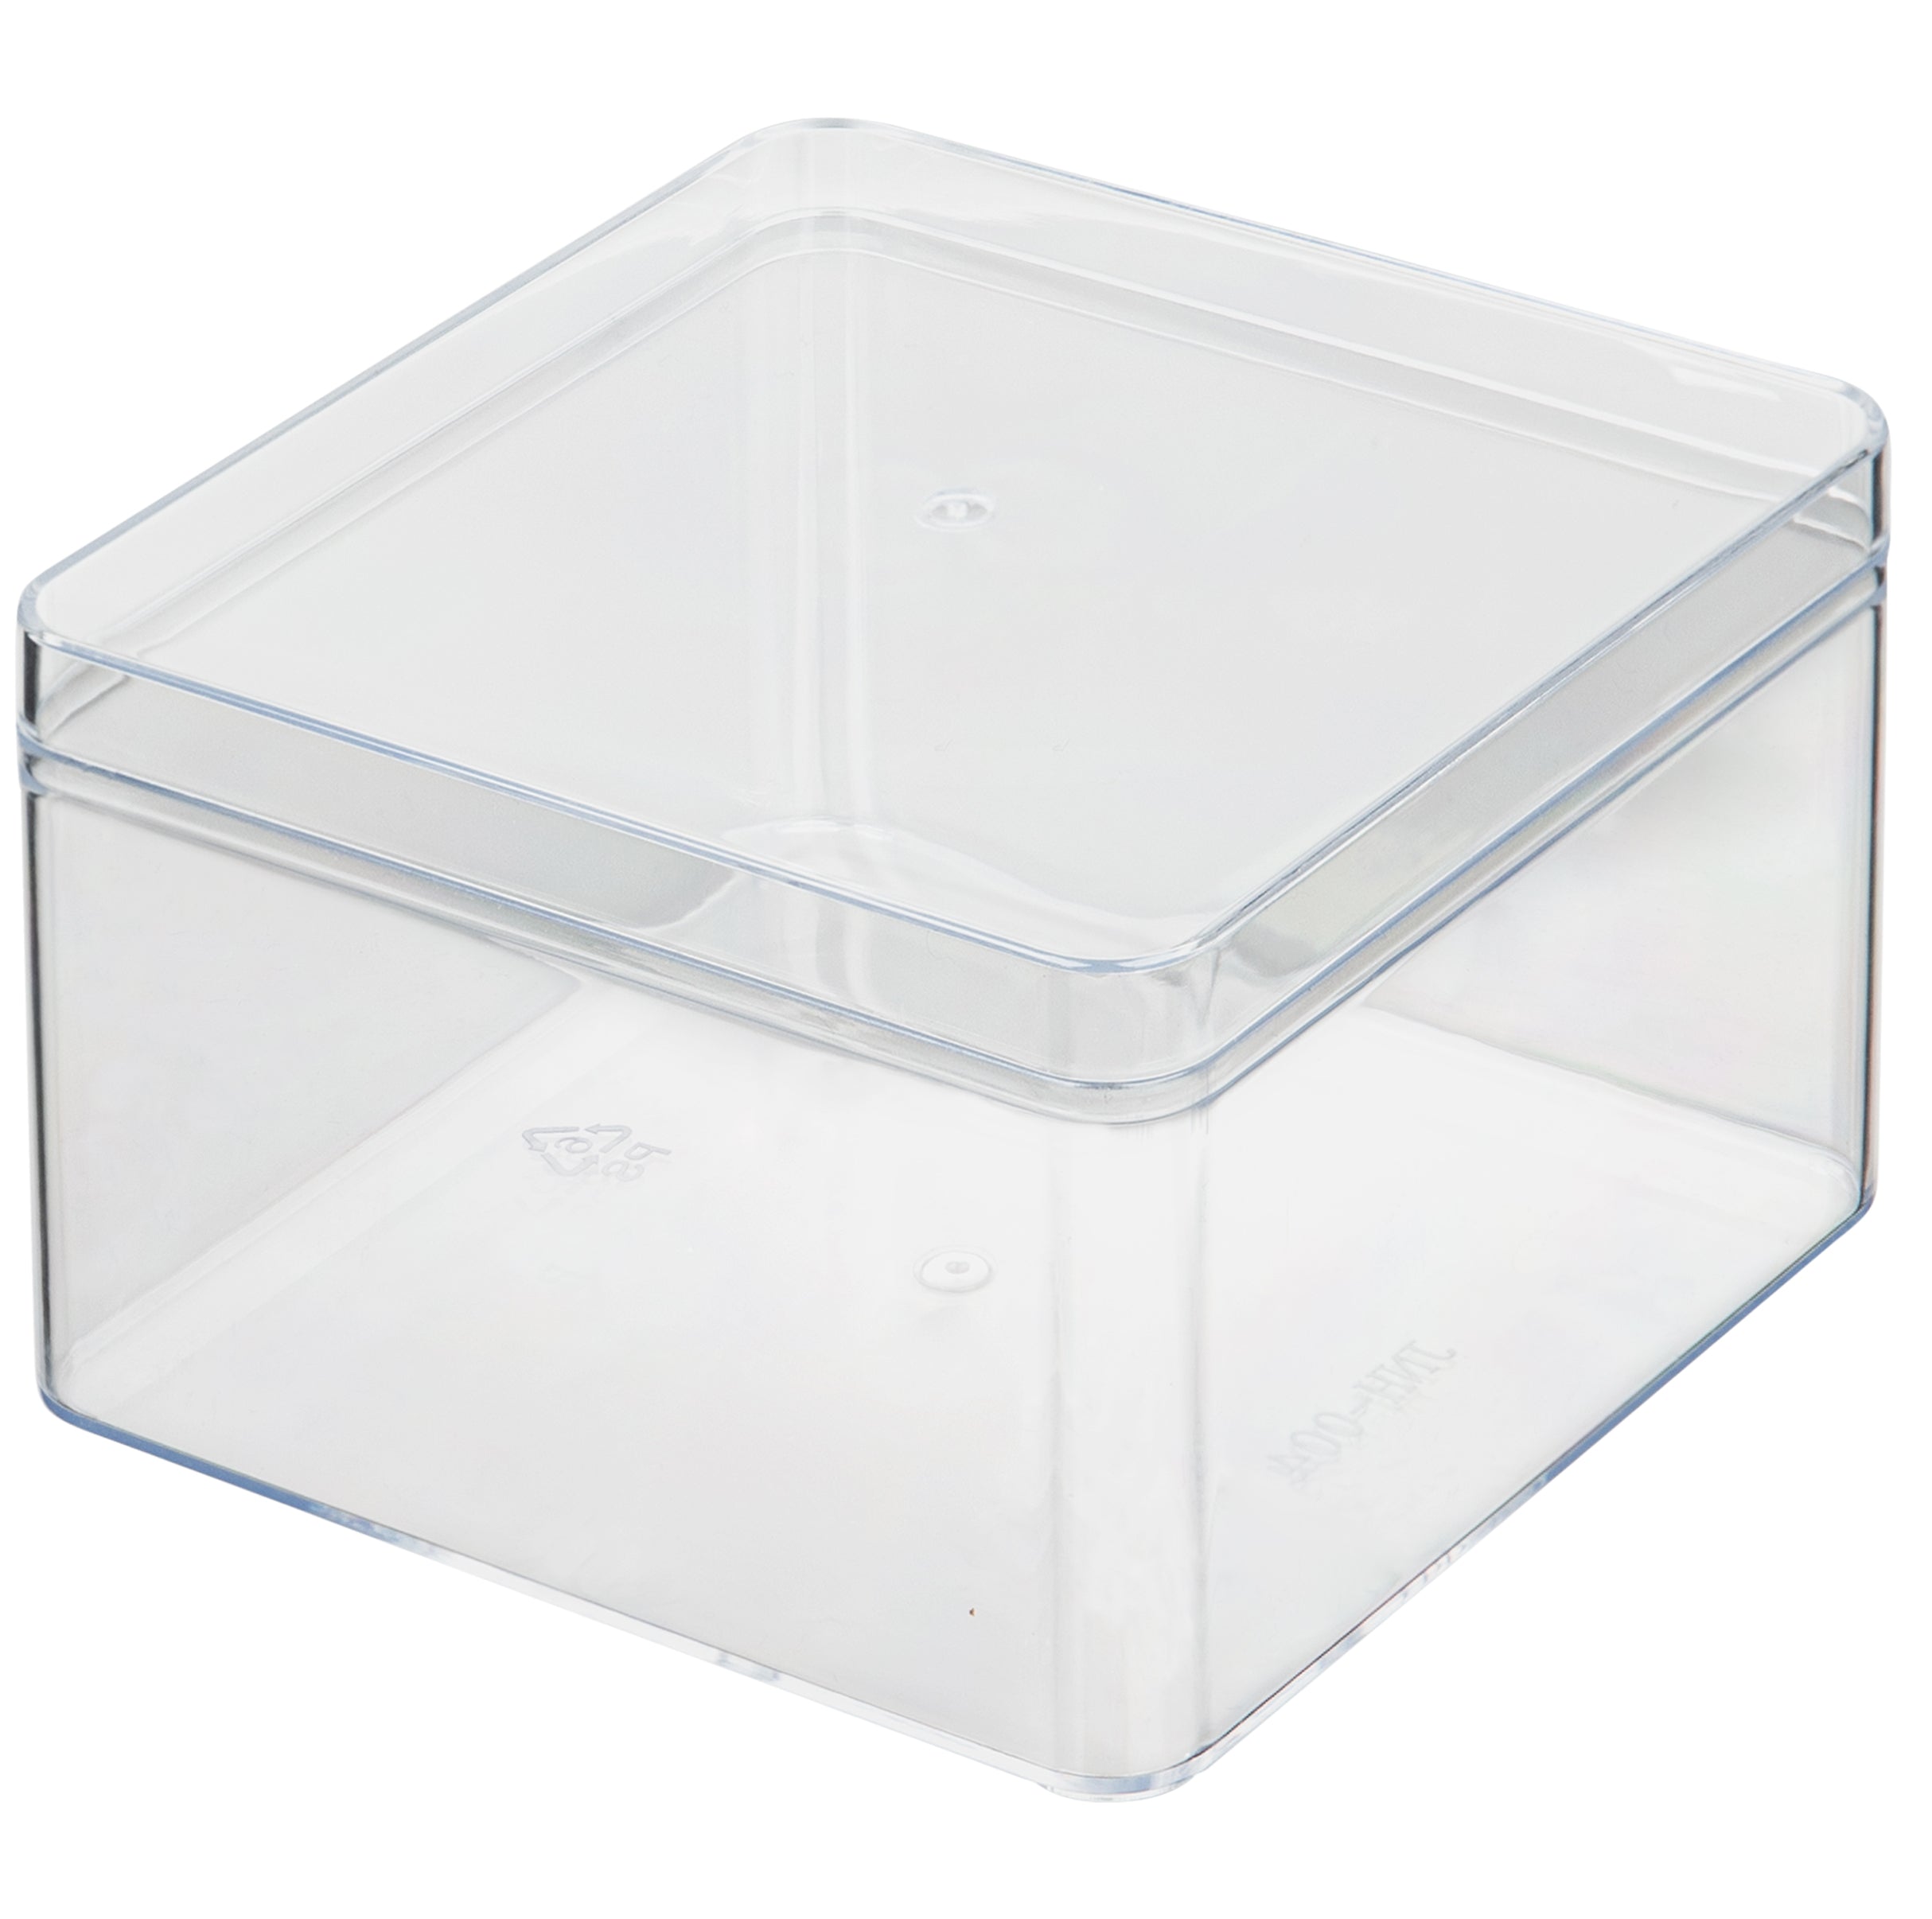 Transparent Acrylic Boxes, Small Transparent Boxes